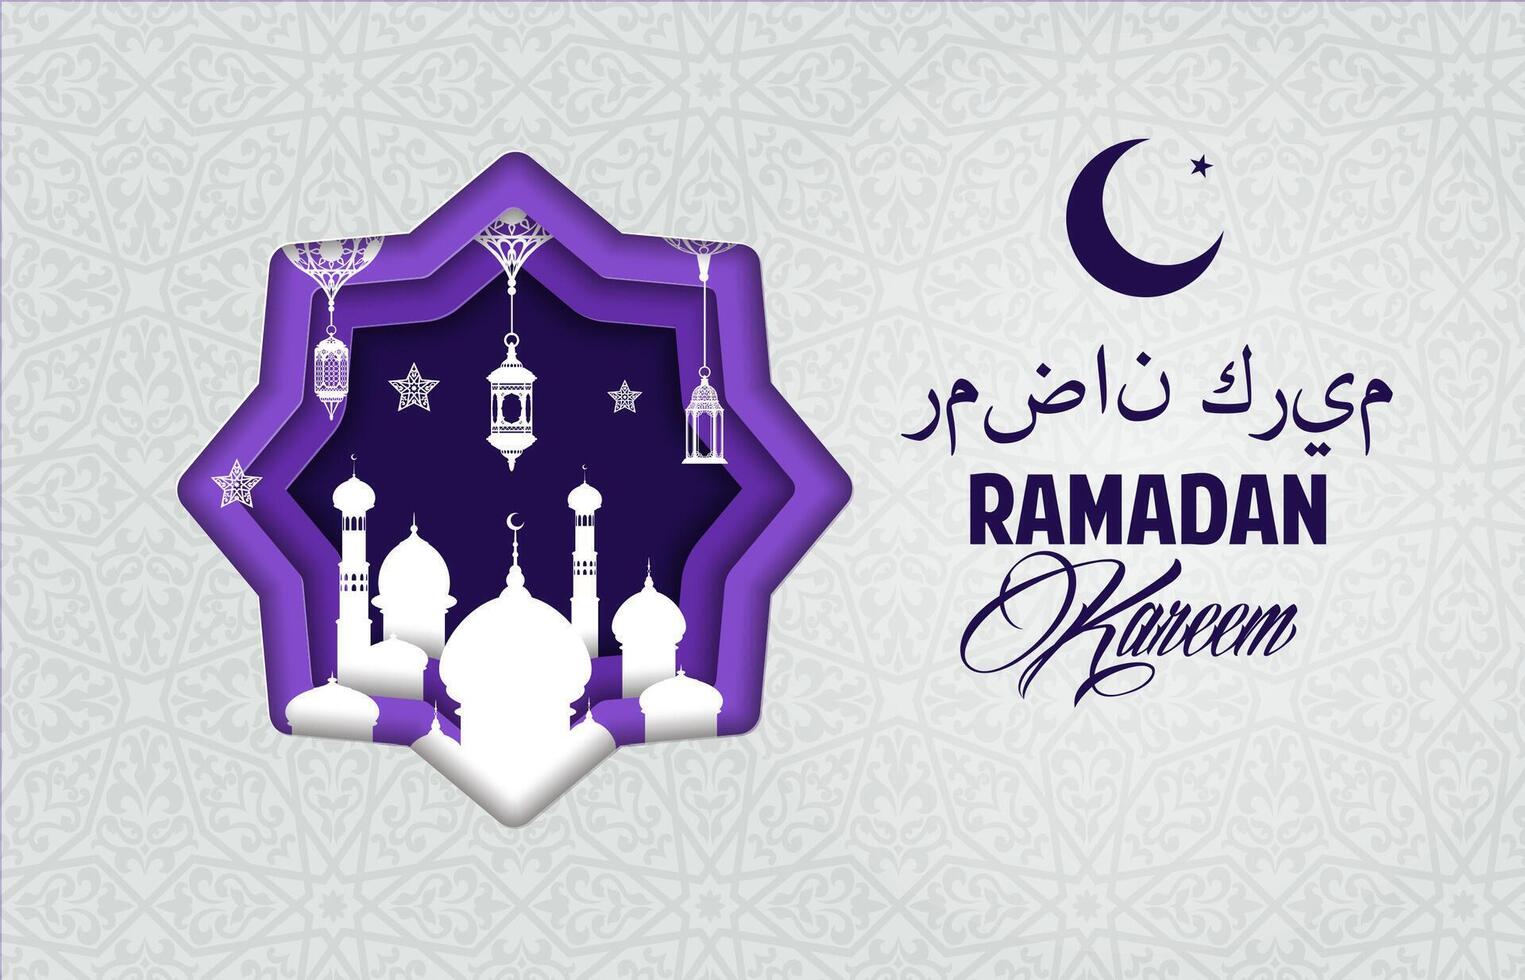 Ramadã kareem papel cortar bandeira com muçulmano mesquita vetor